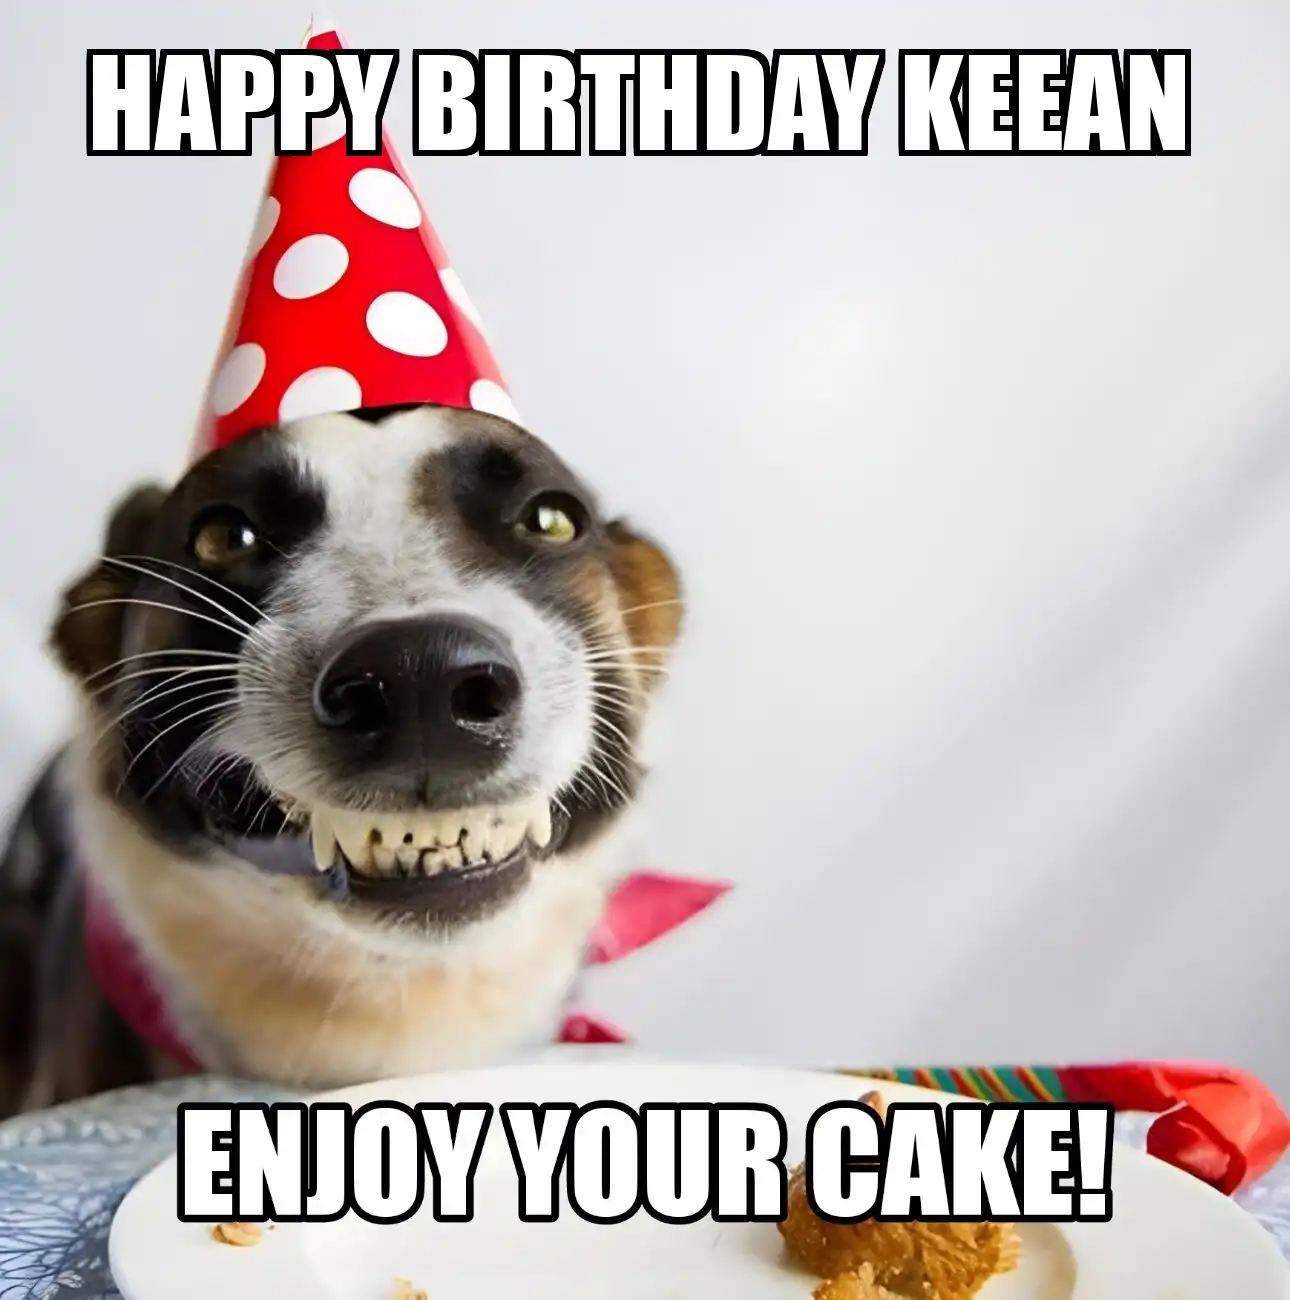 Happy Birthday Keean Enjoy Your Cake Dog Meme